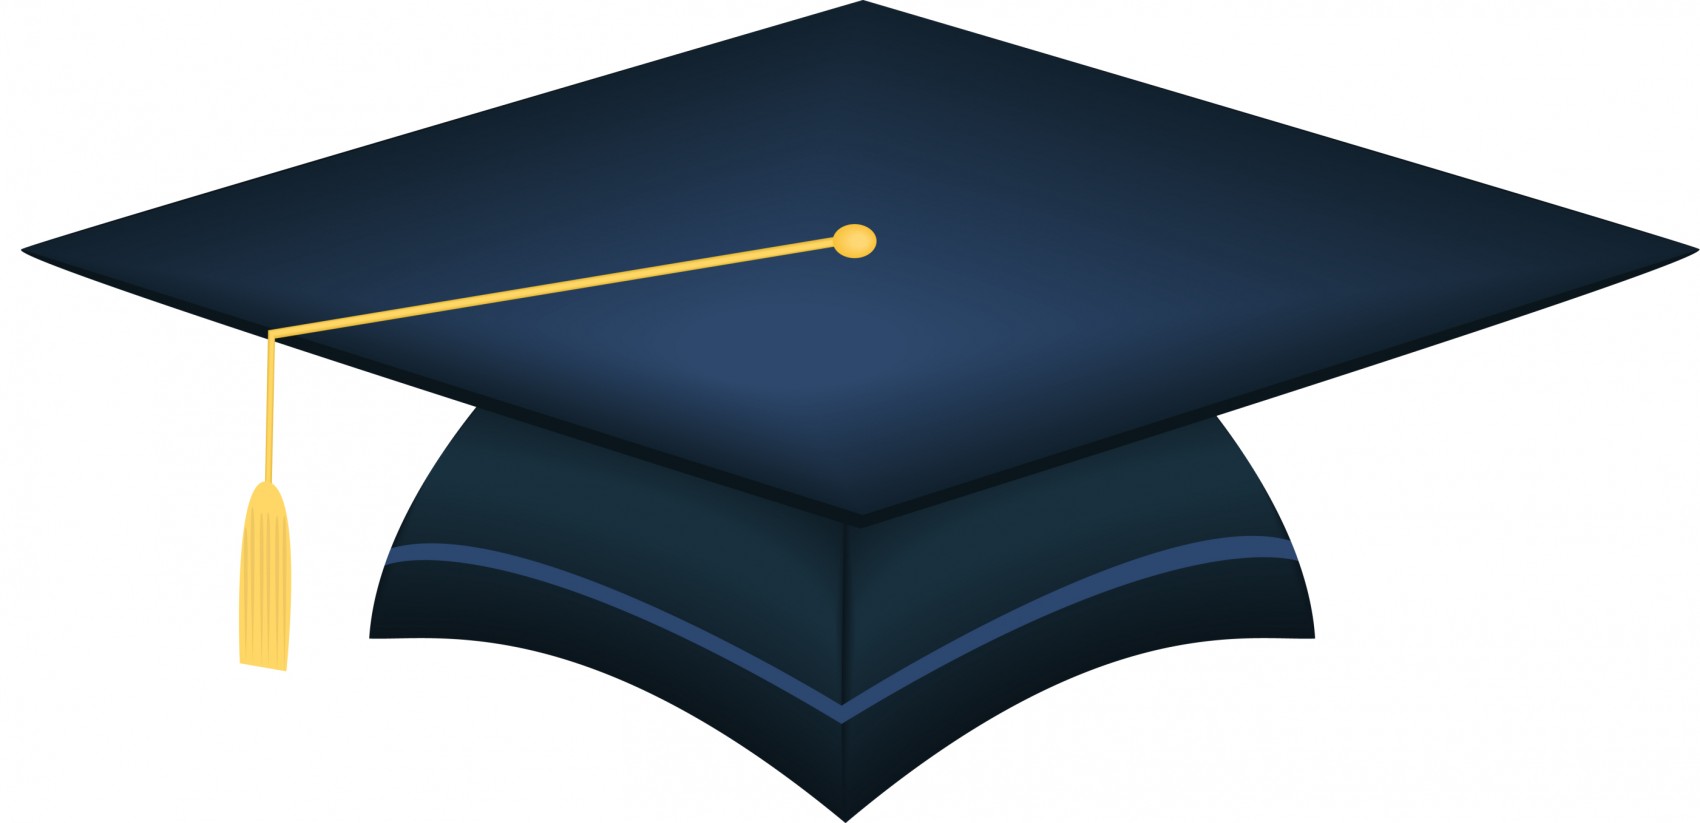 2014 Graduation Cap Clip Art | Courseimage